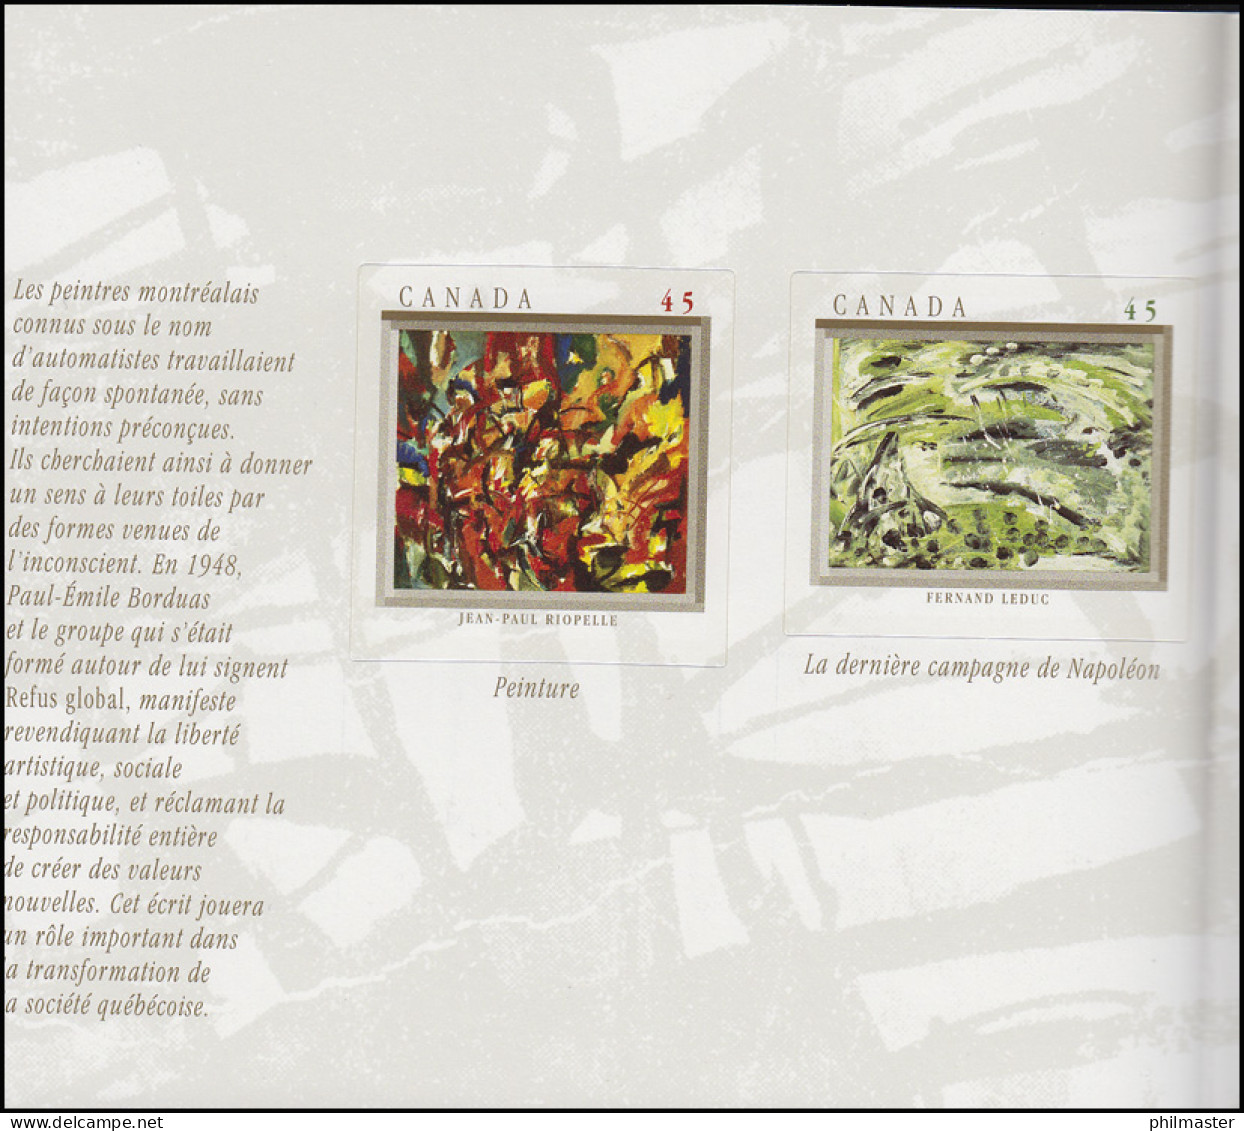 Kanada: Klappkarte The Automatistes - Impressionismus Entwürfe Montrealer Maler  - Impresionismo